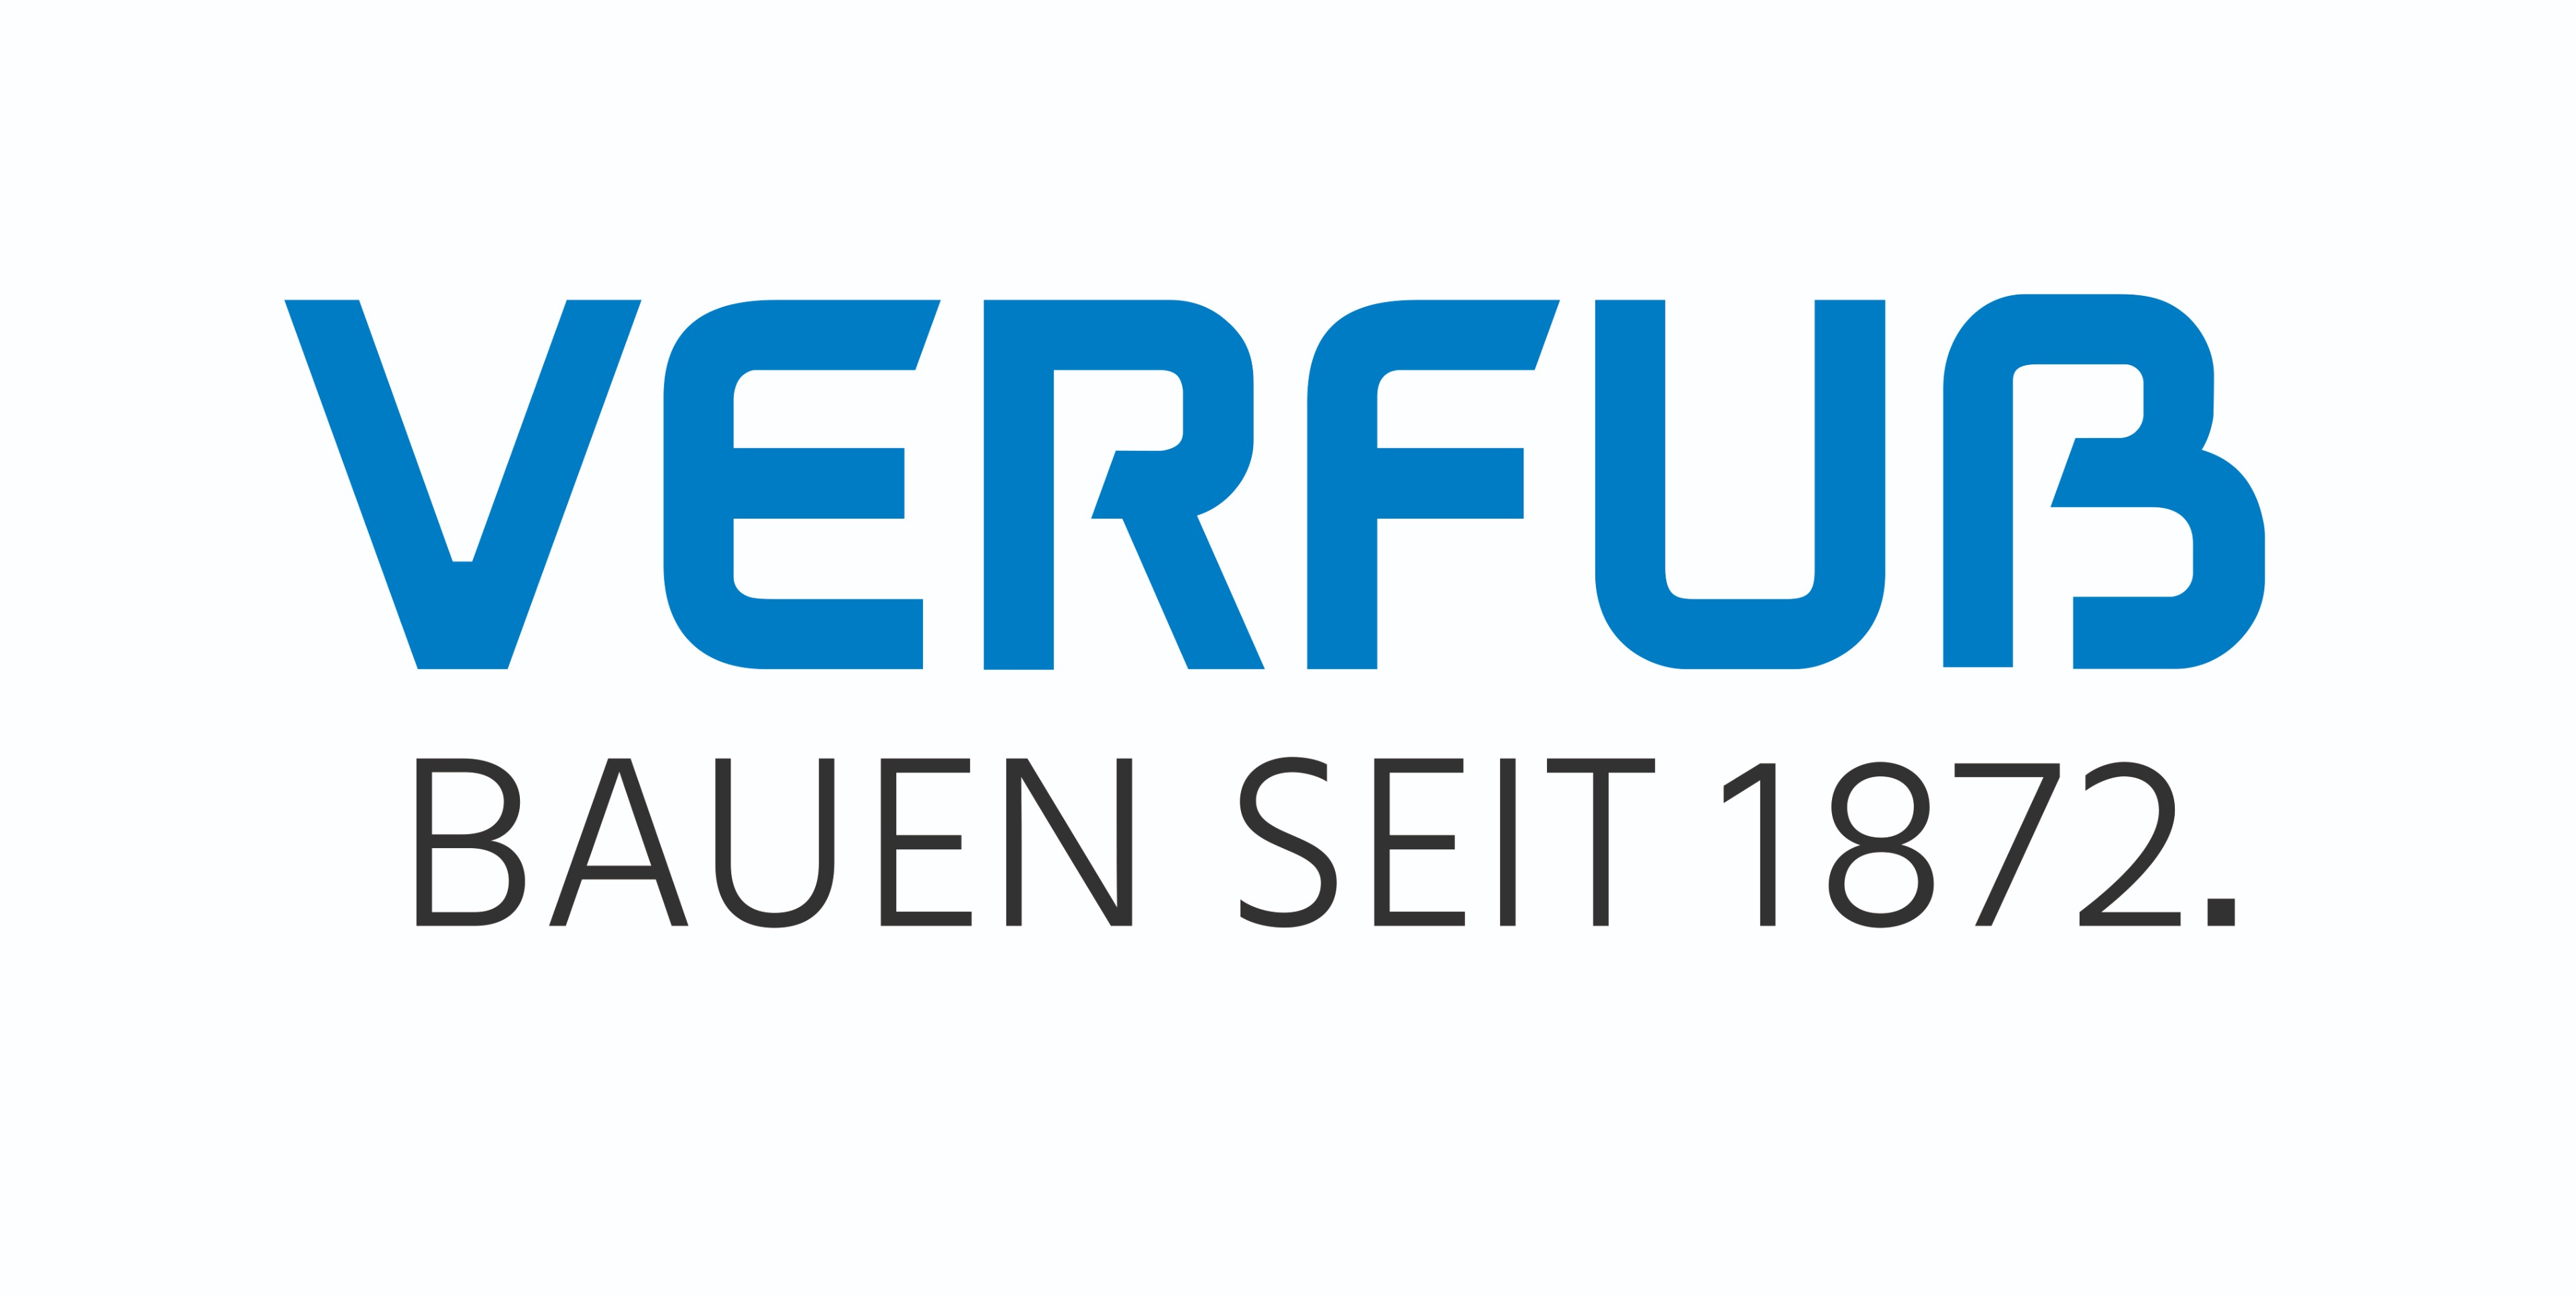 Verfuß GmbH